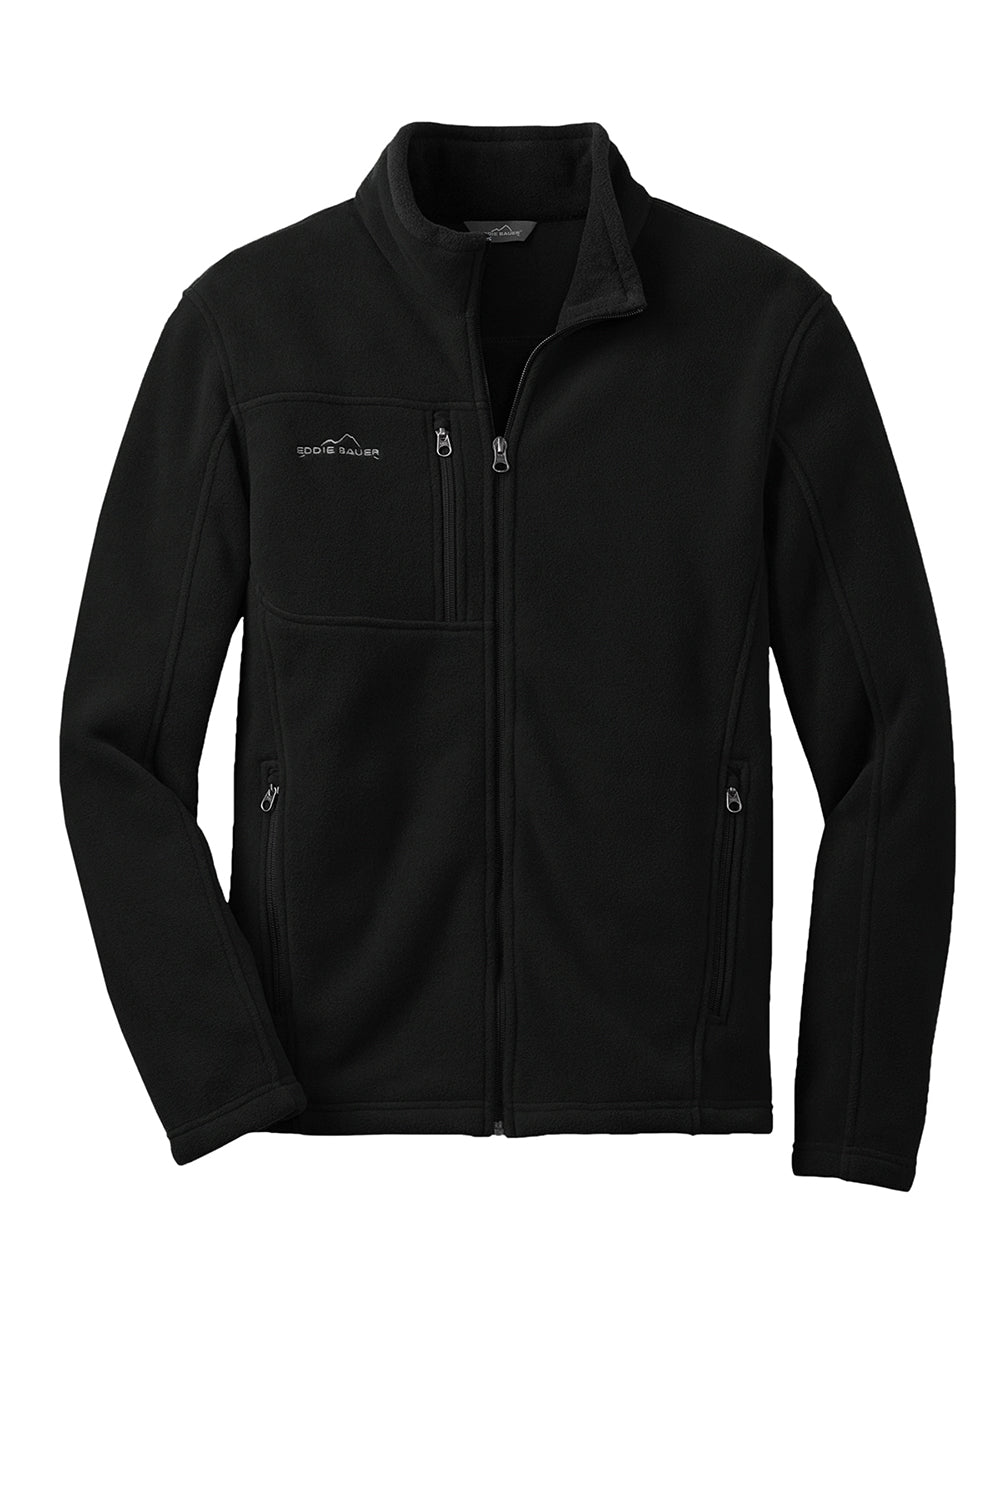 Eddie Bauer EB200 Mens Full Zip Fleece Jacket Black Flat Front